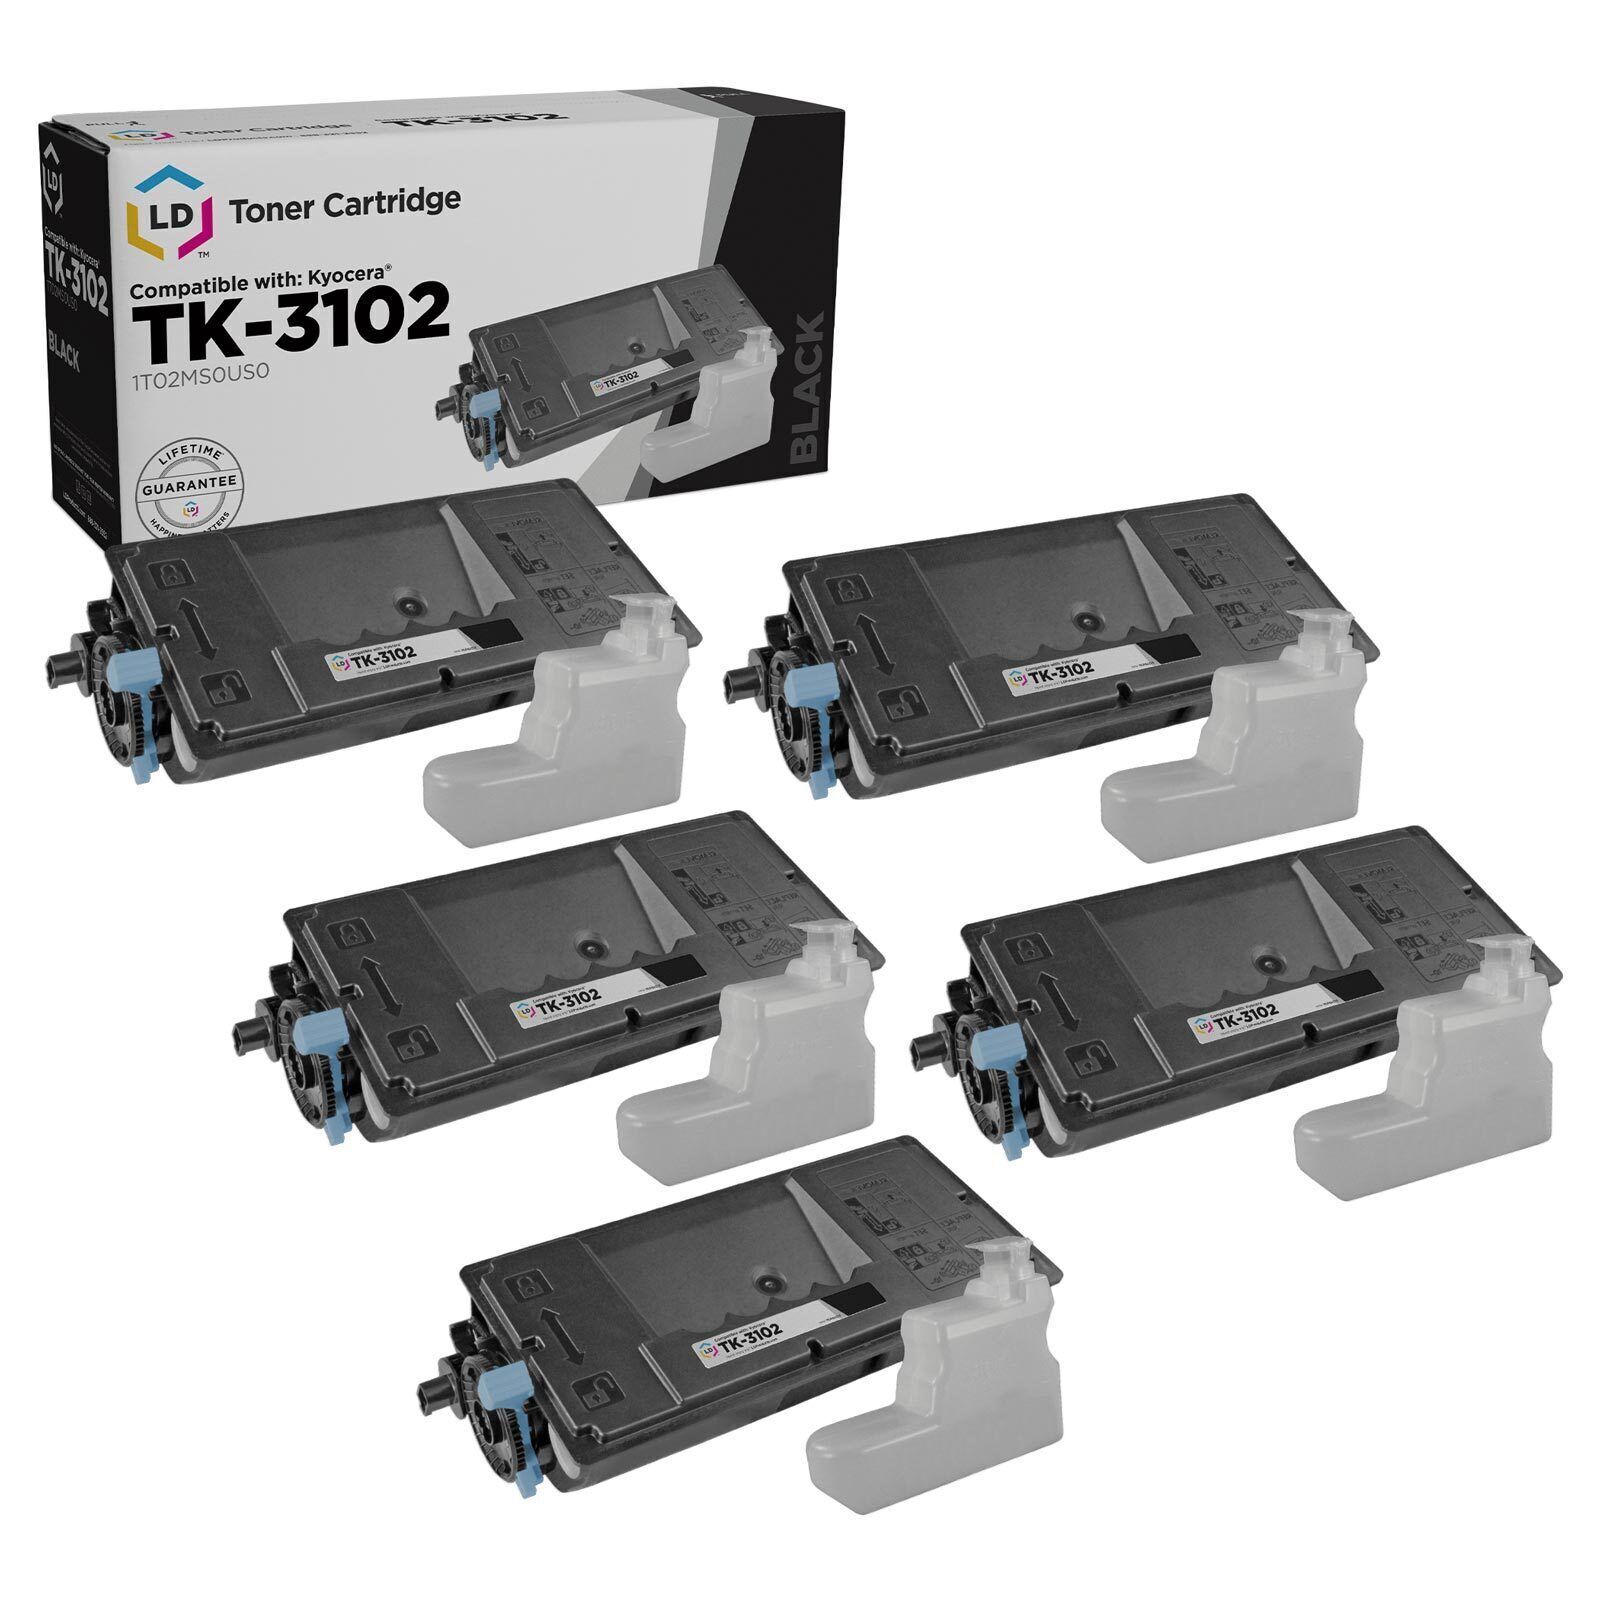 LD Set of 5 Comp Kyocera-Mita Black TK-3102 1T02MS0US0 Toner FS-2100DN